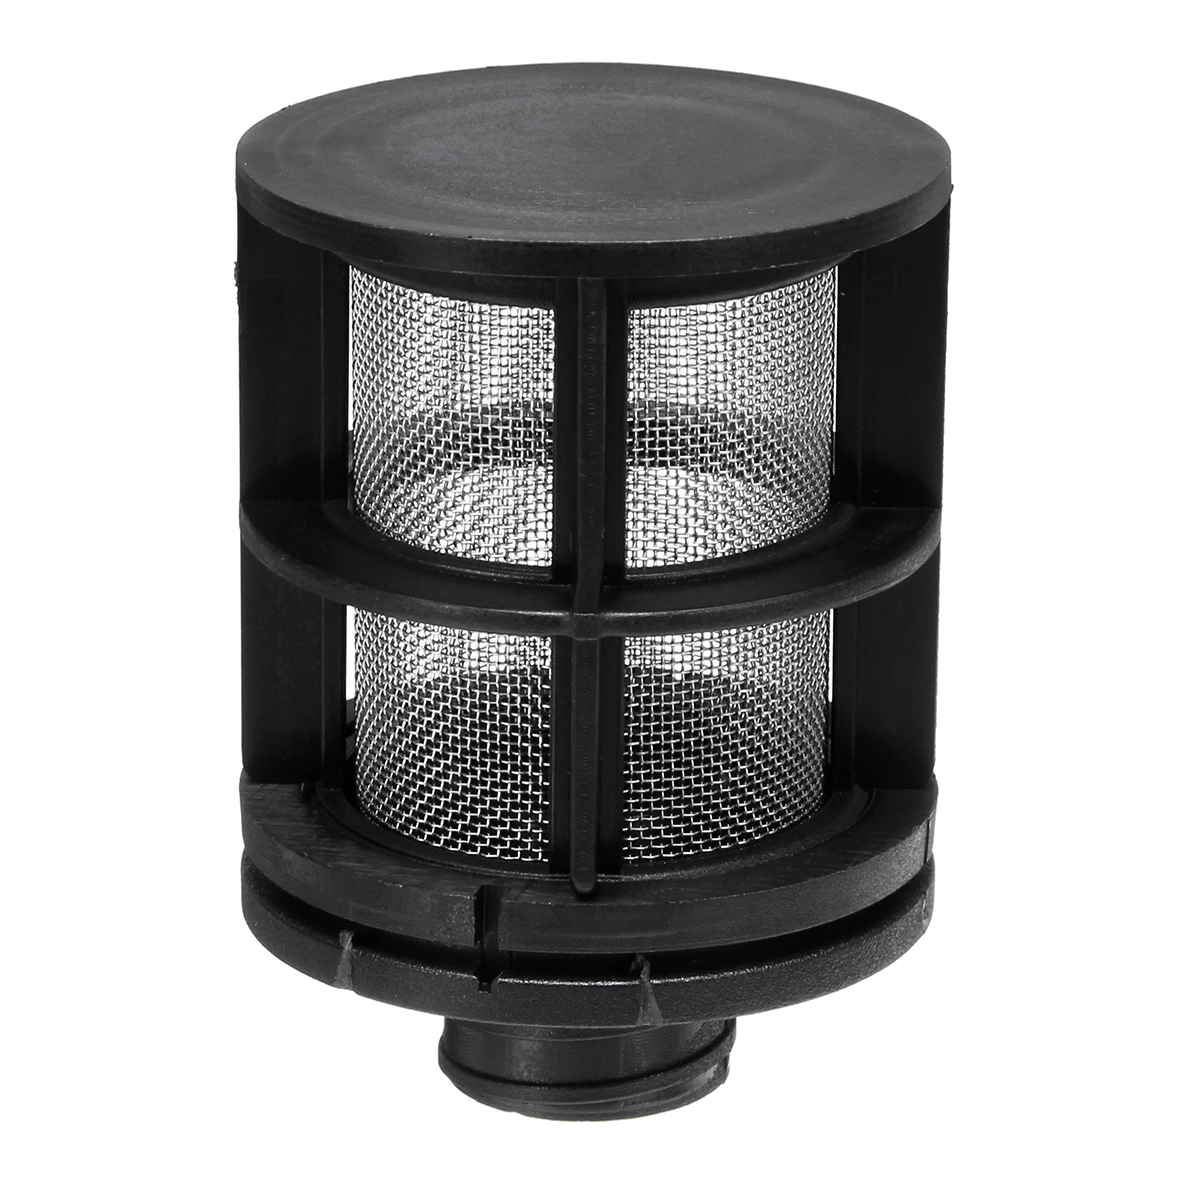 25mm-Air-Intake-Filter-Silencer-For-Dometic-Eberspacher-Webasto-Diesel-Heater-1409798-6